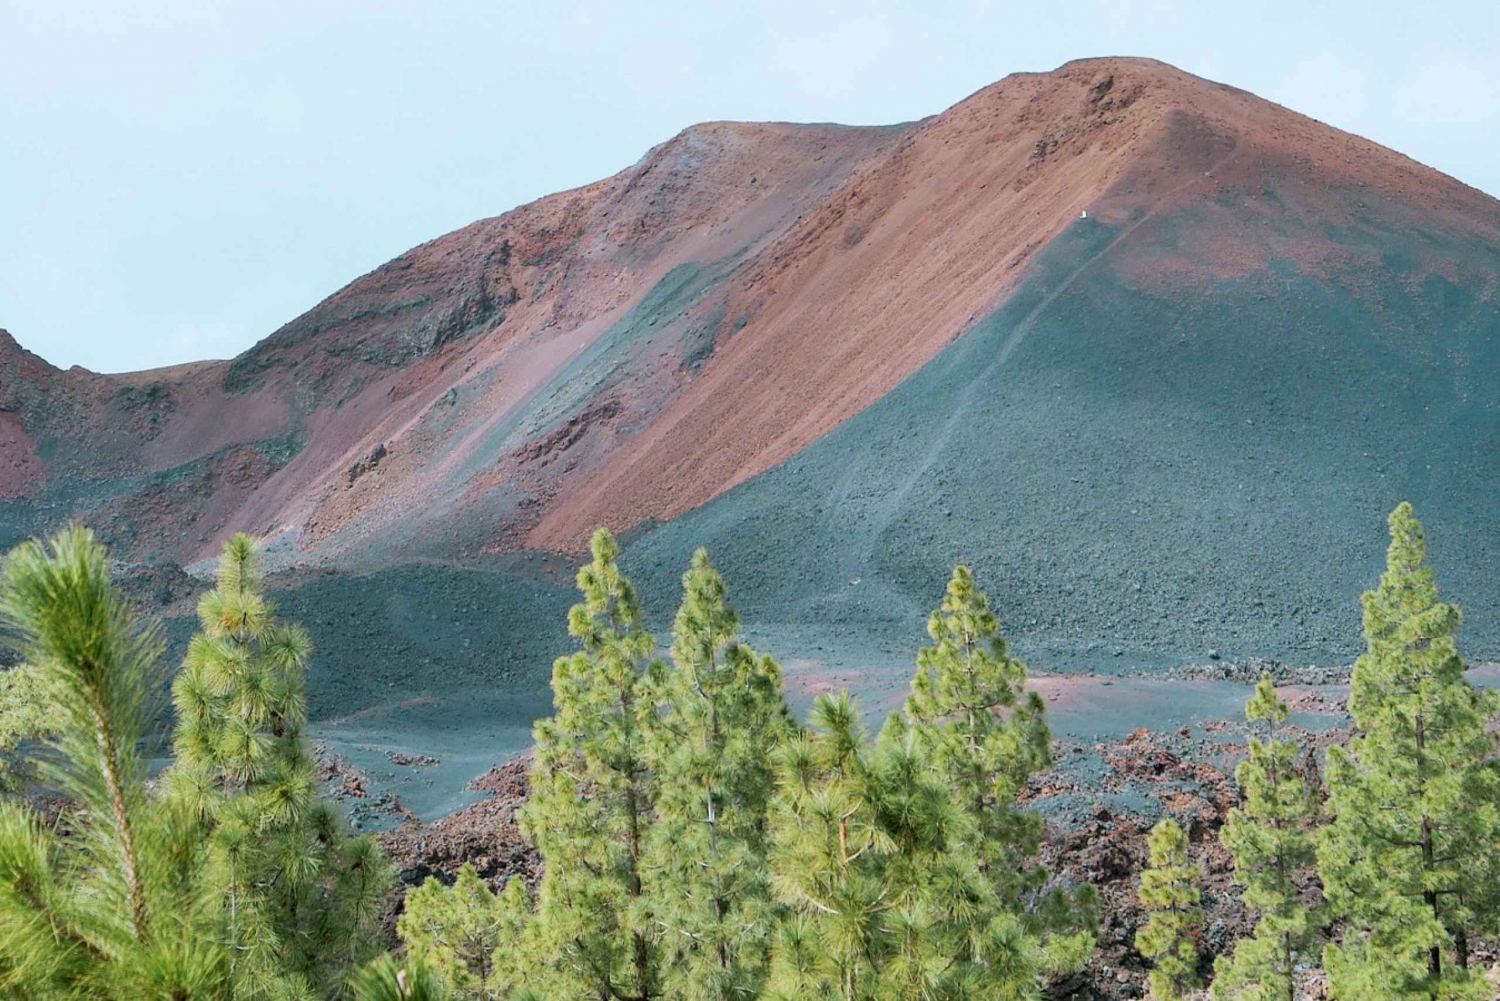 Tenerife: Teide Volcano and North of the Island VIP Tour